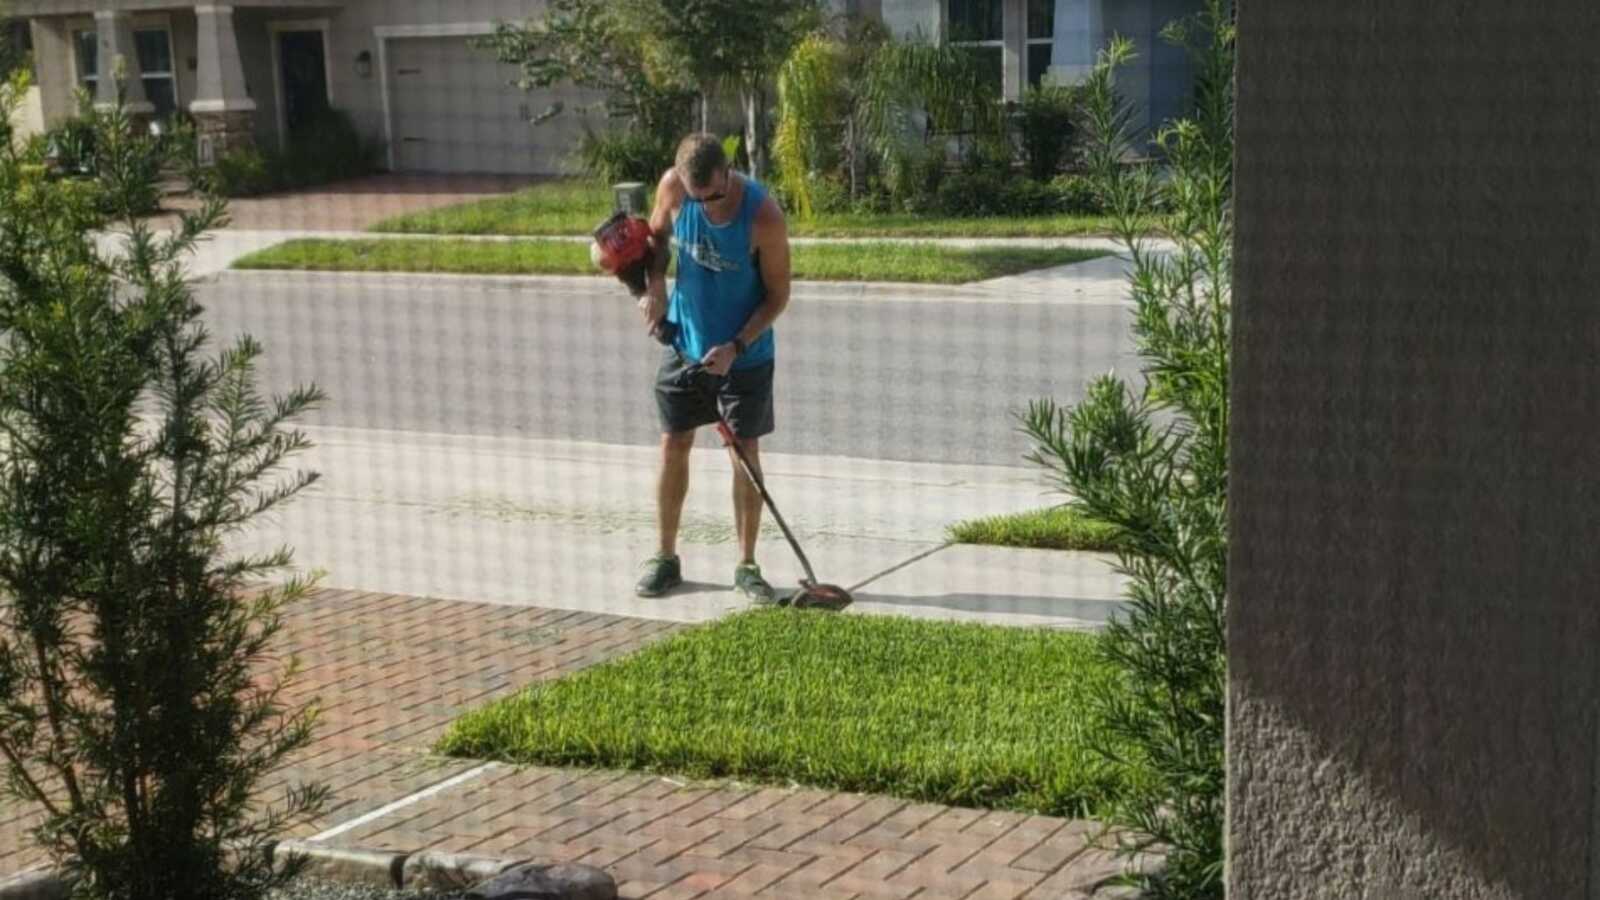 Kind neighbor cutting grass for family